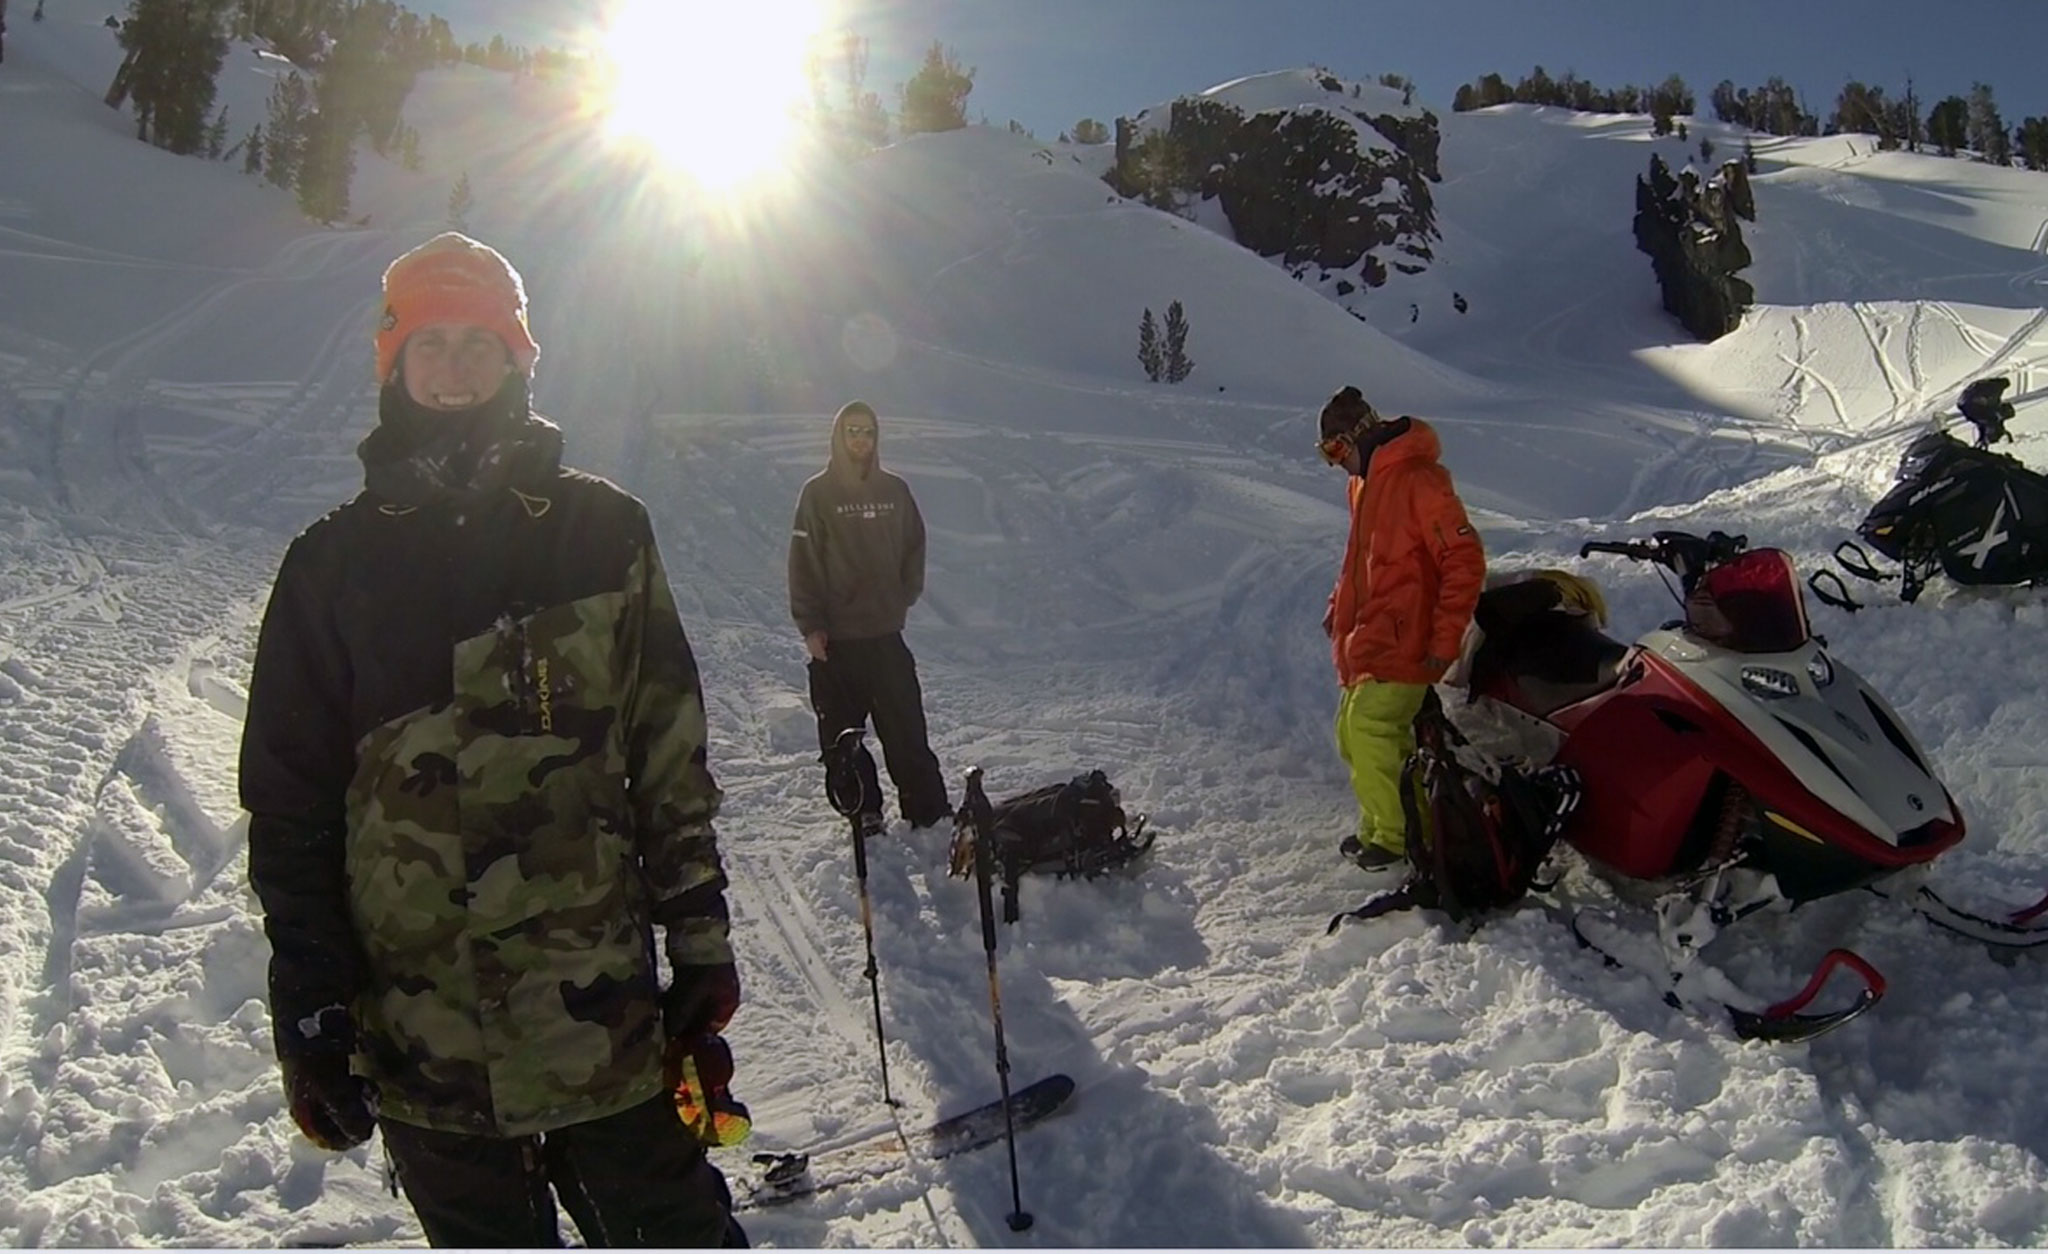 Chris Benchetler finishing his X Games Real Ski Backcountry part